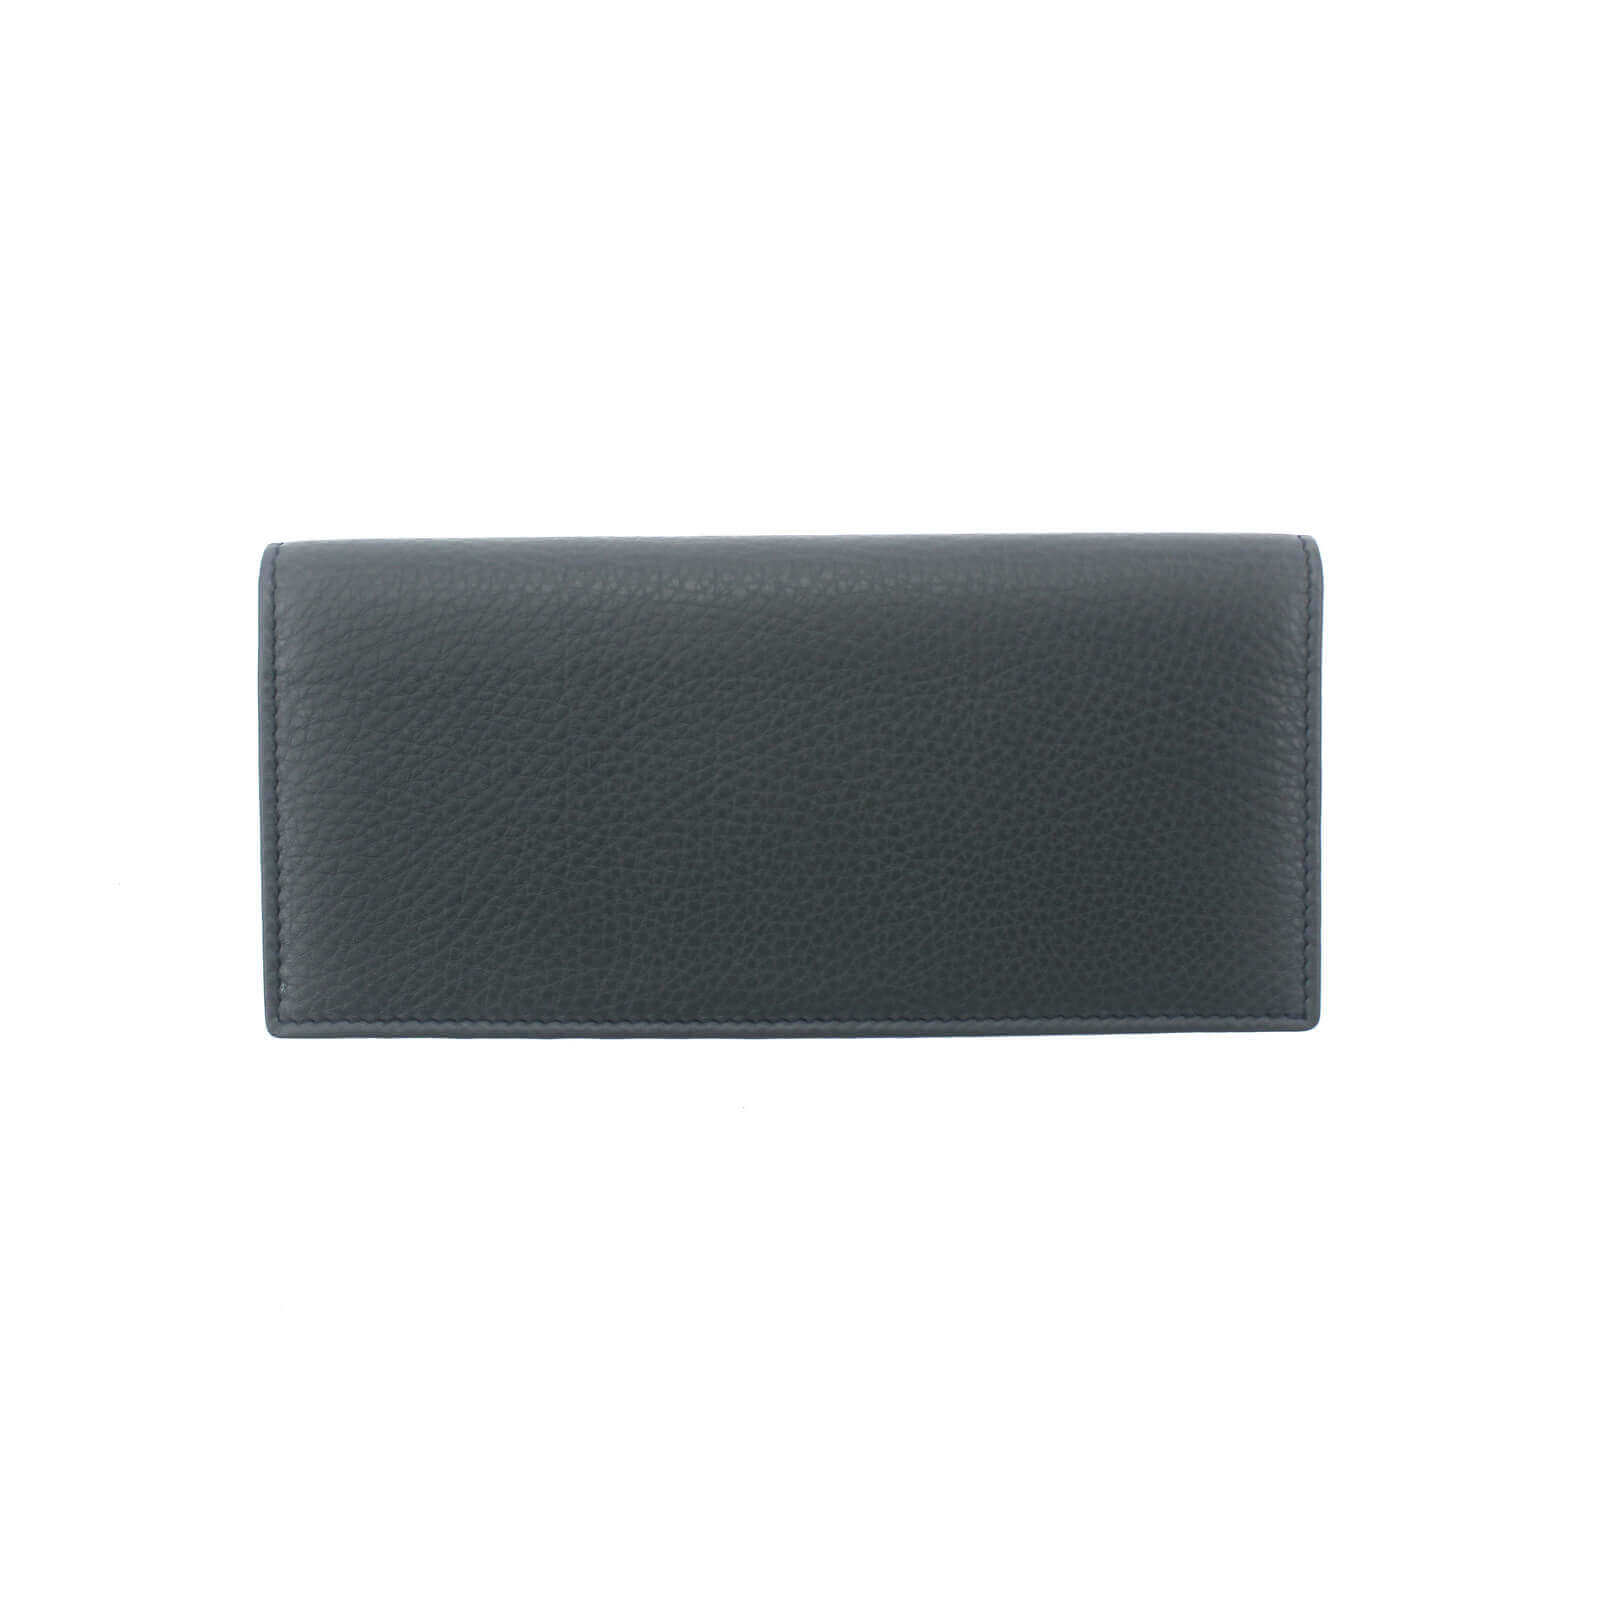 Long wallet with Interlocking G